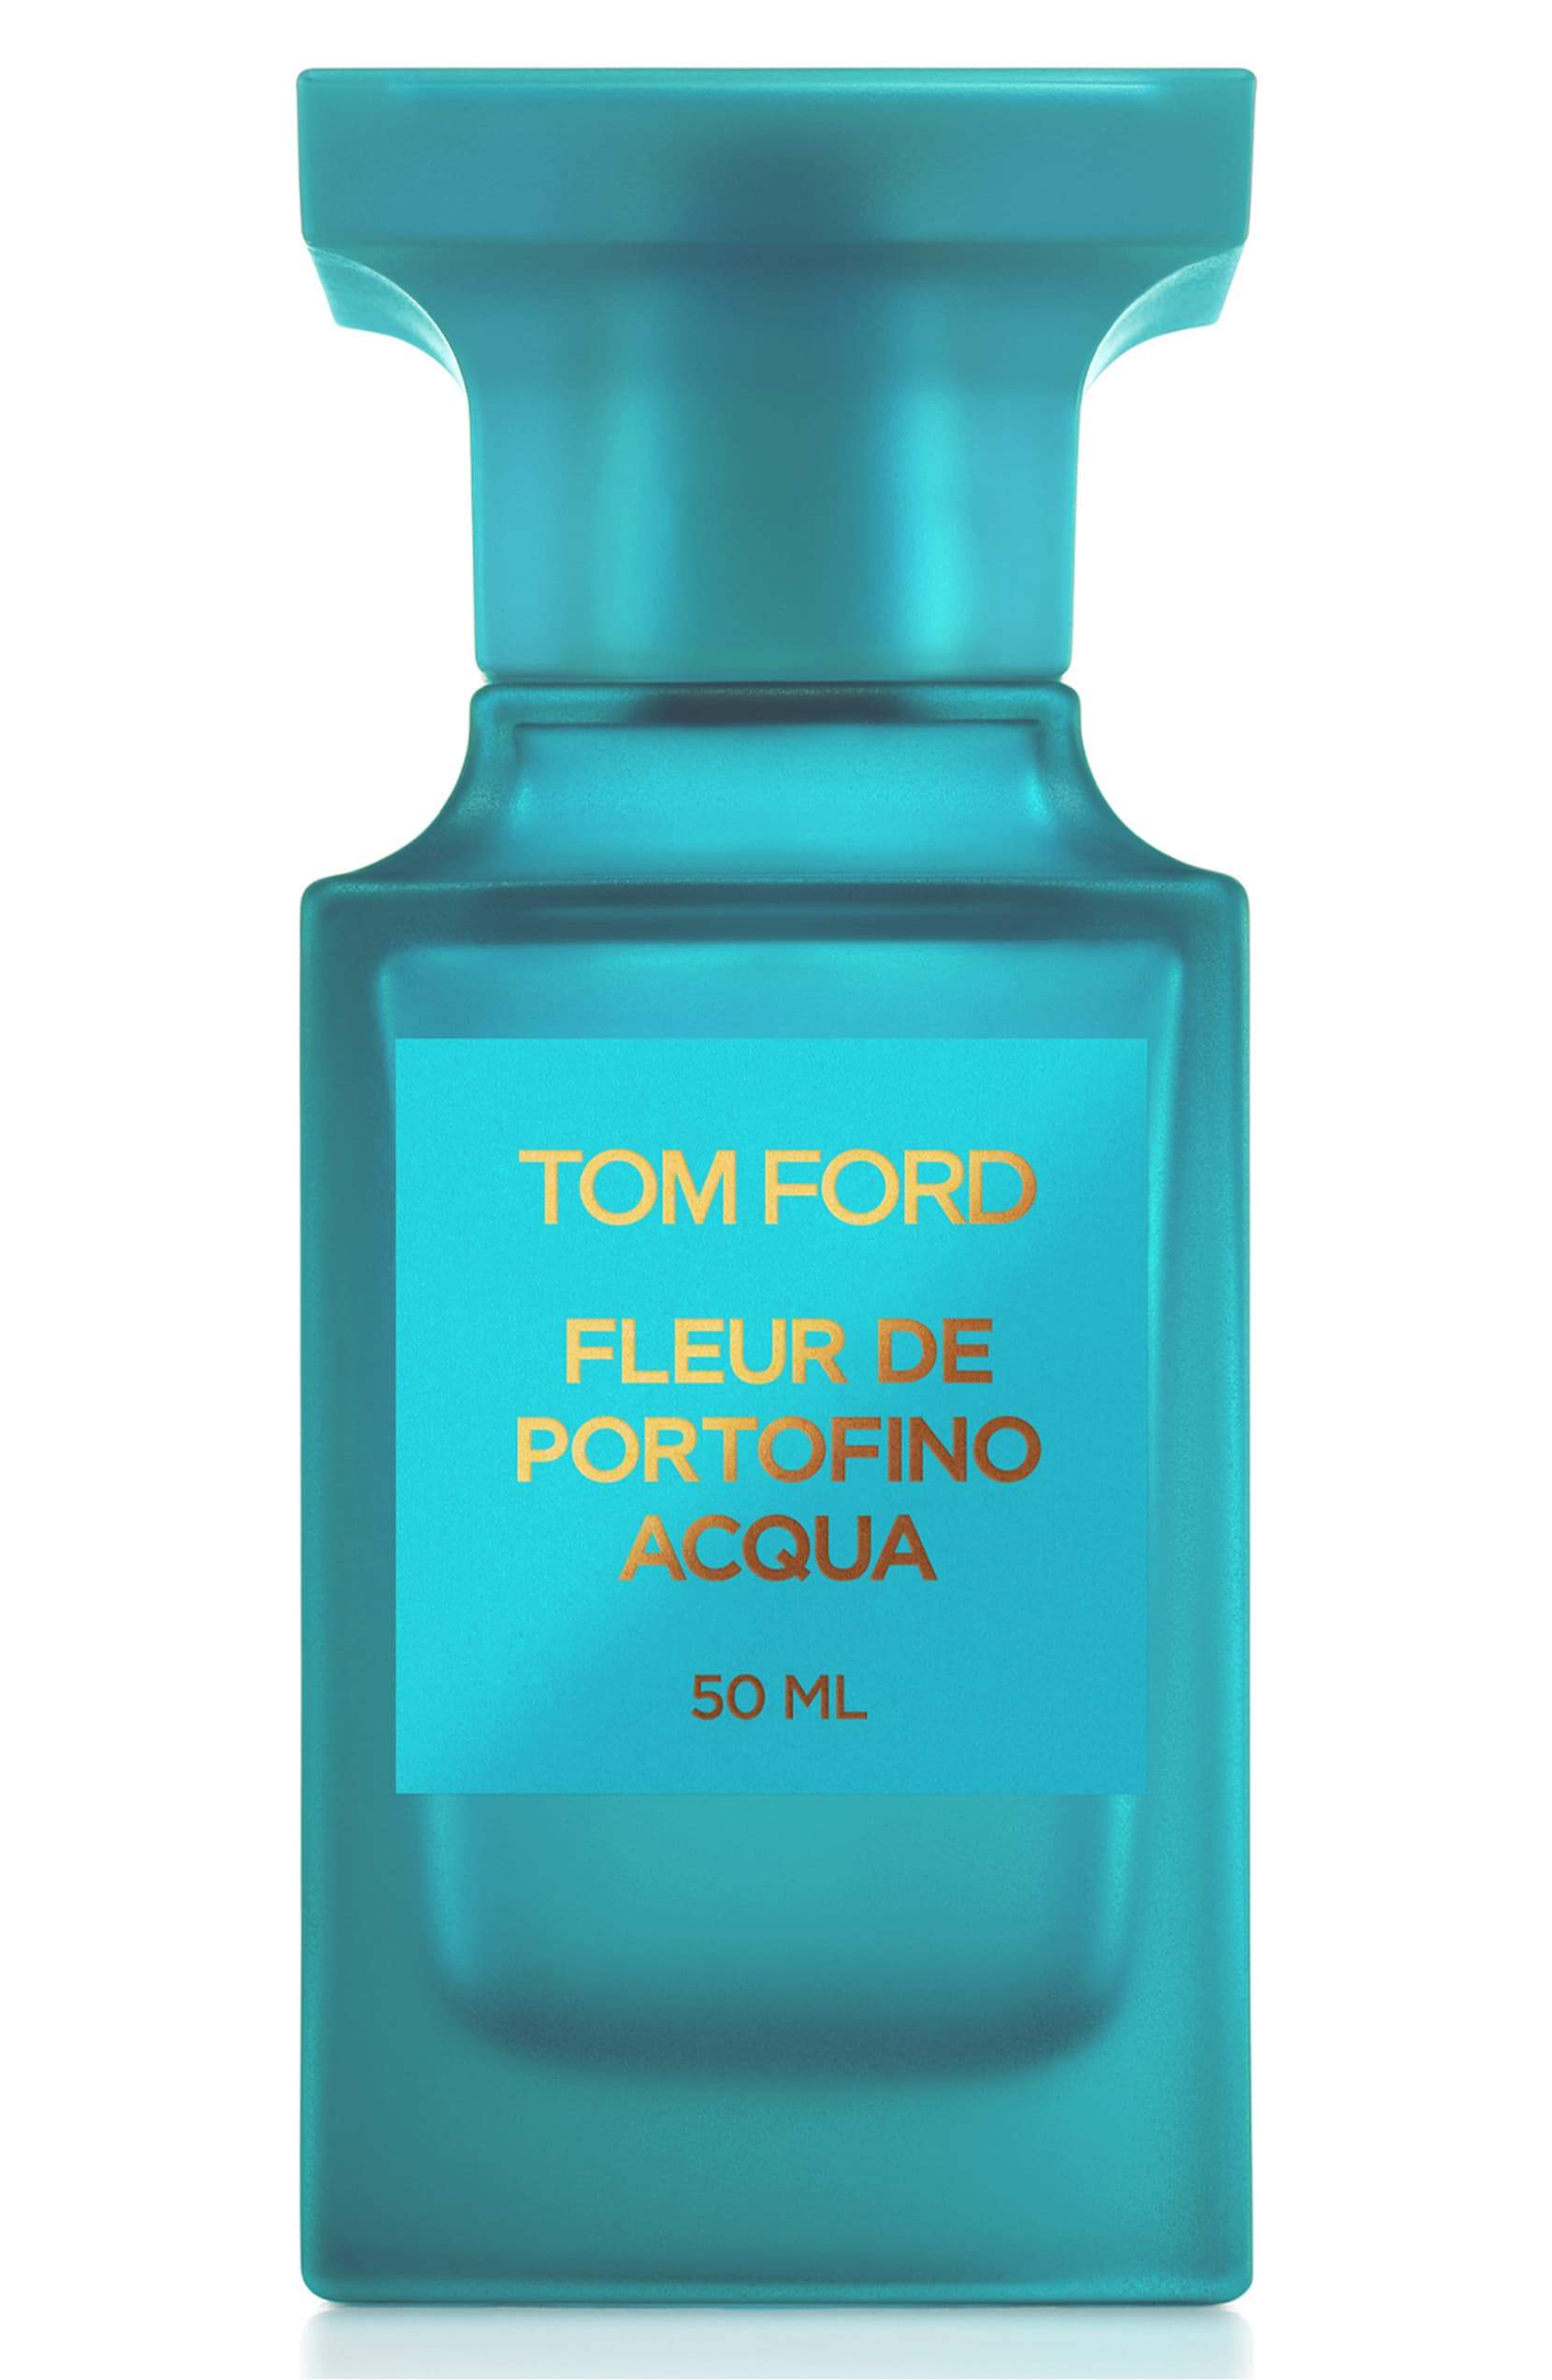 TOM FORD Fleur de Portofino Acqua Eau de Toilette Spray 1.7 oz - eCosmeticWorld